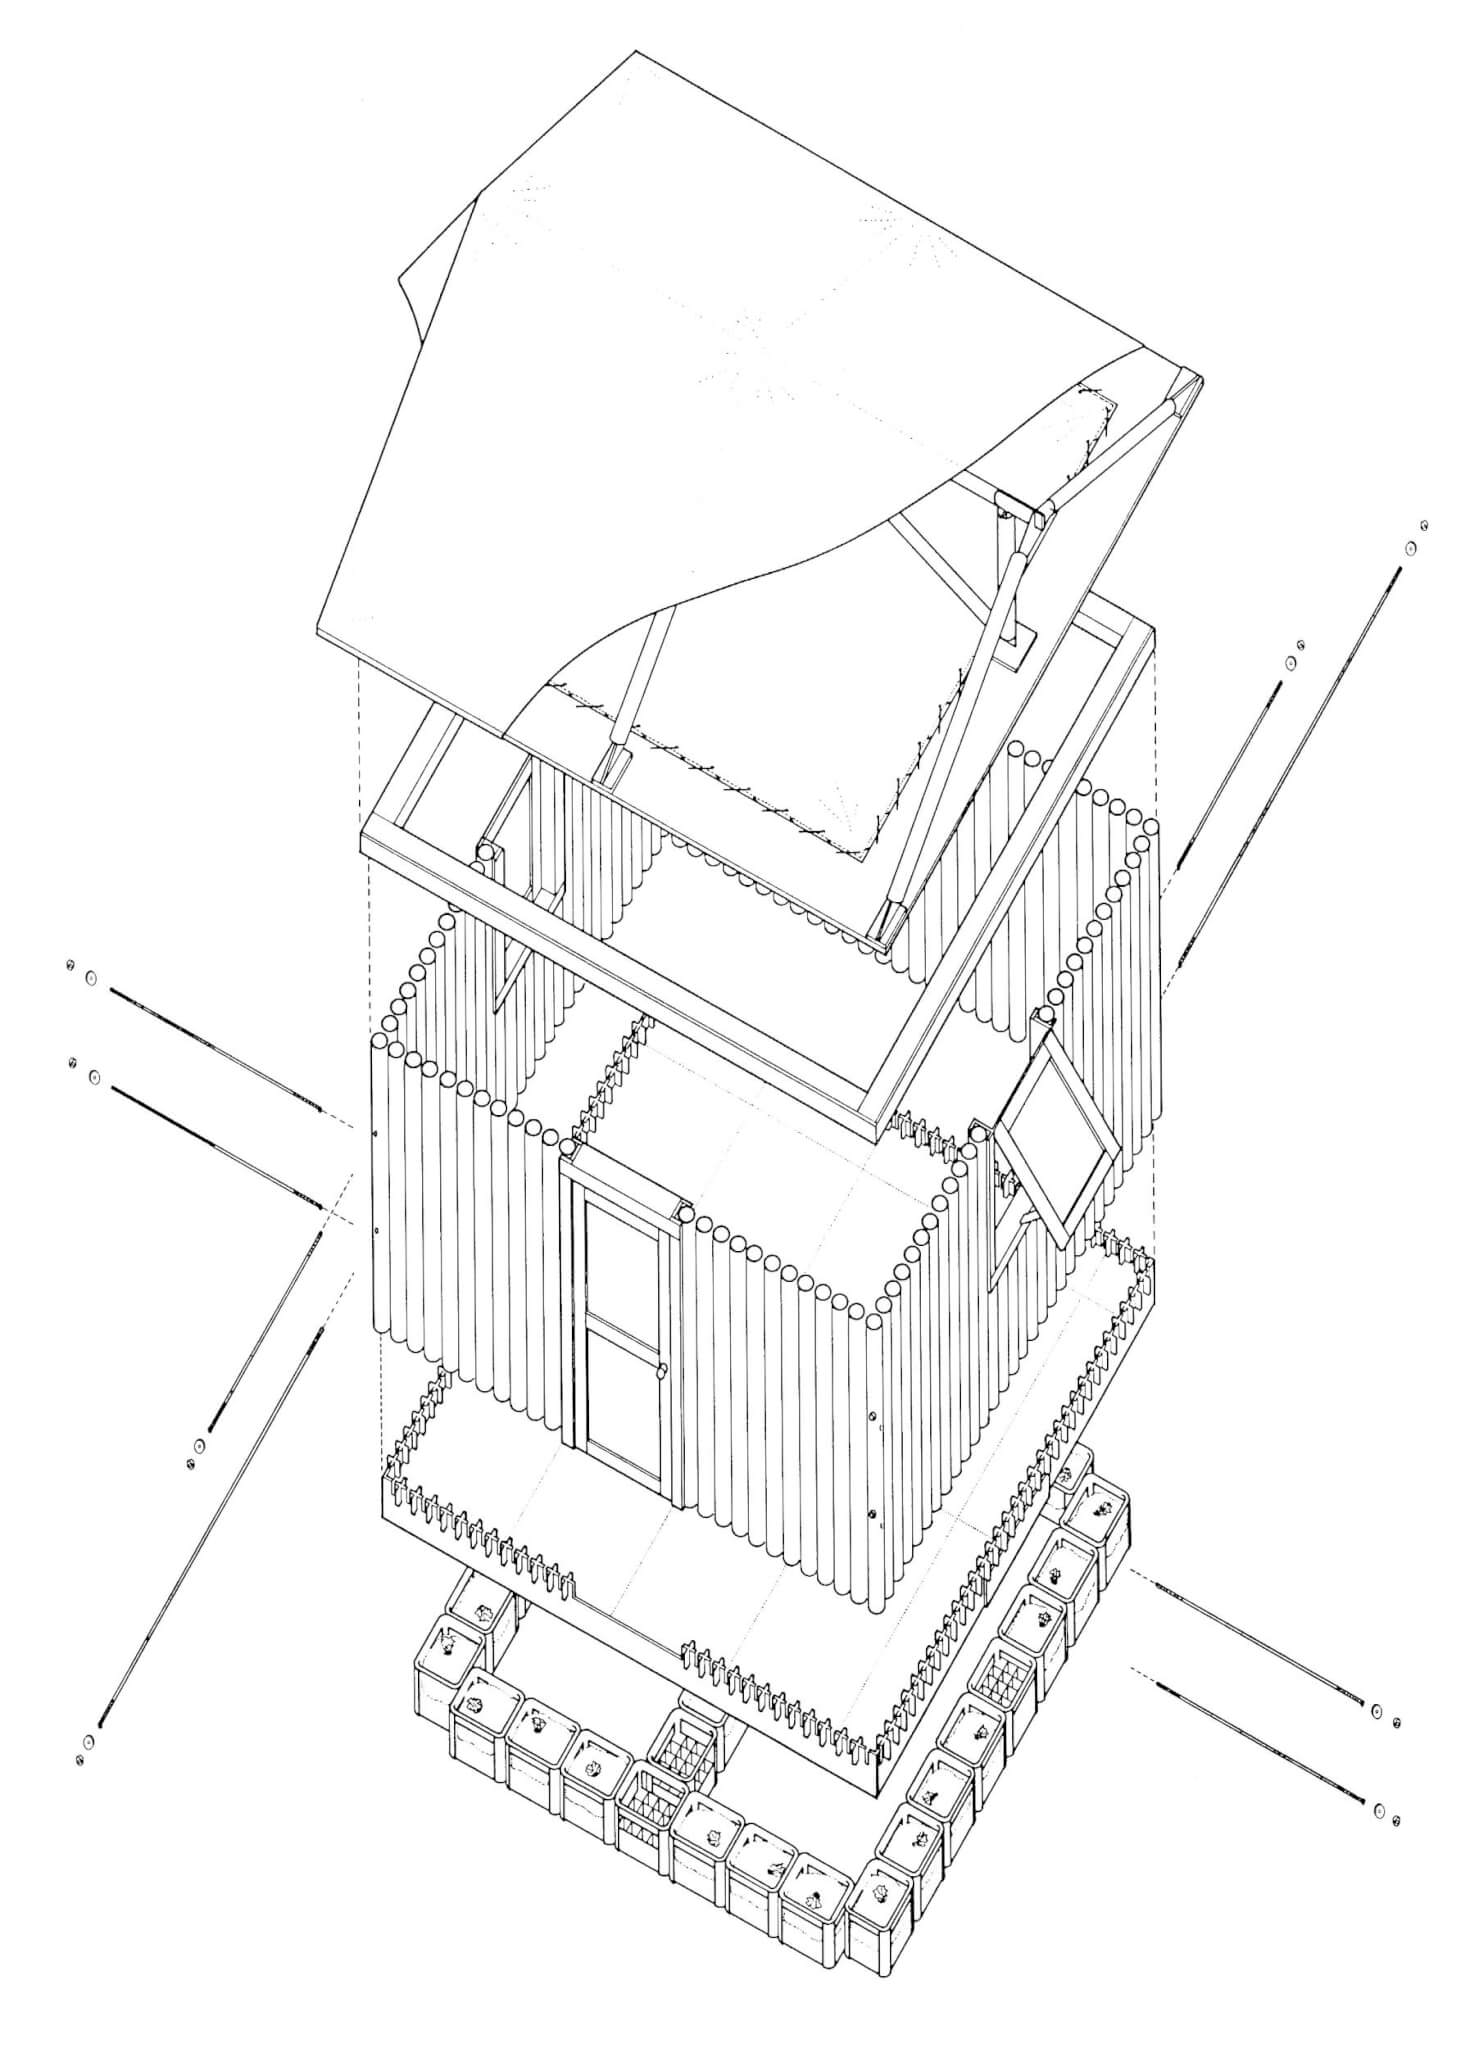 Axonometric Diagram of The Paper Log House